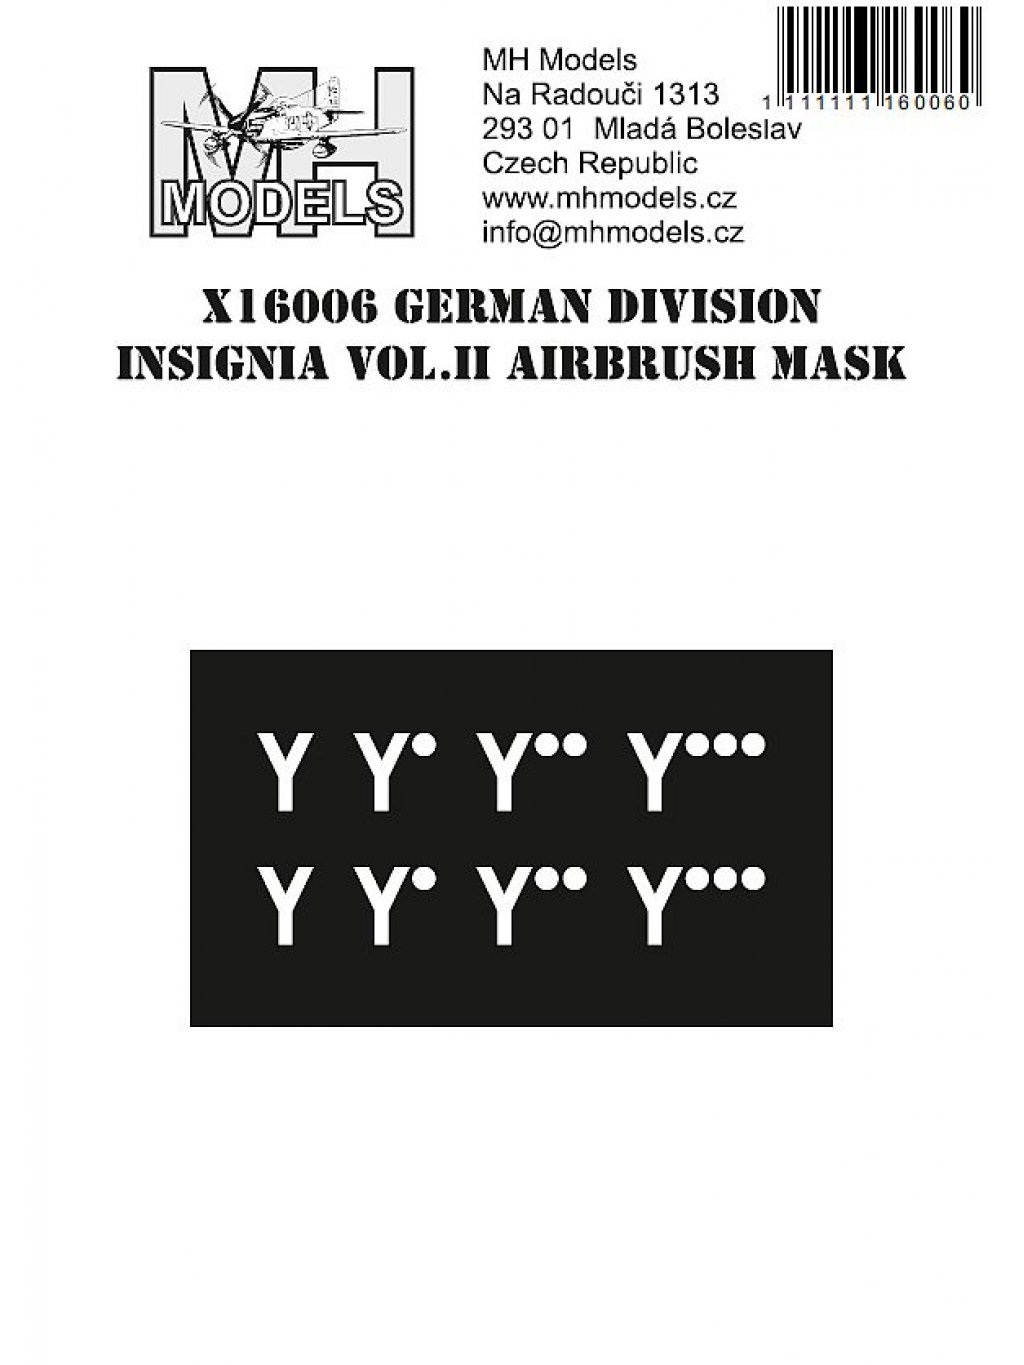 German division insignia vol.II airbrush mask